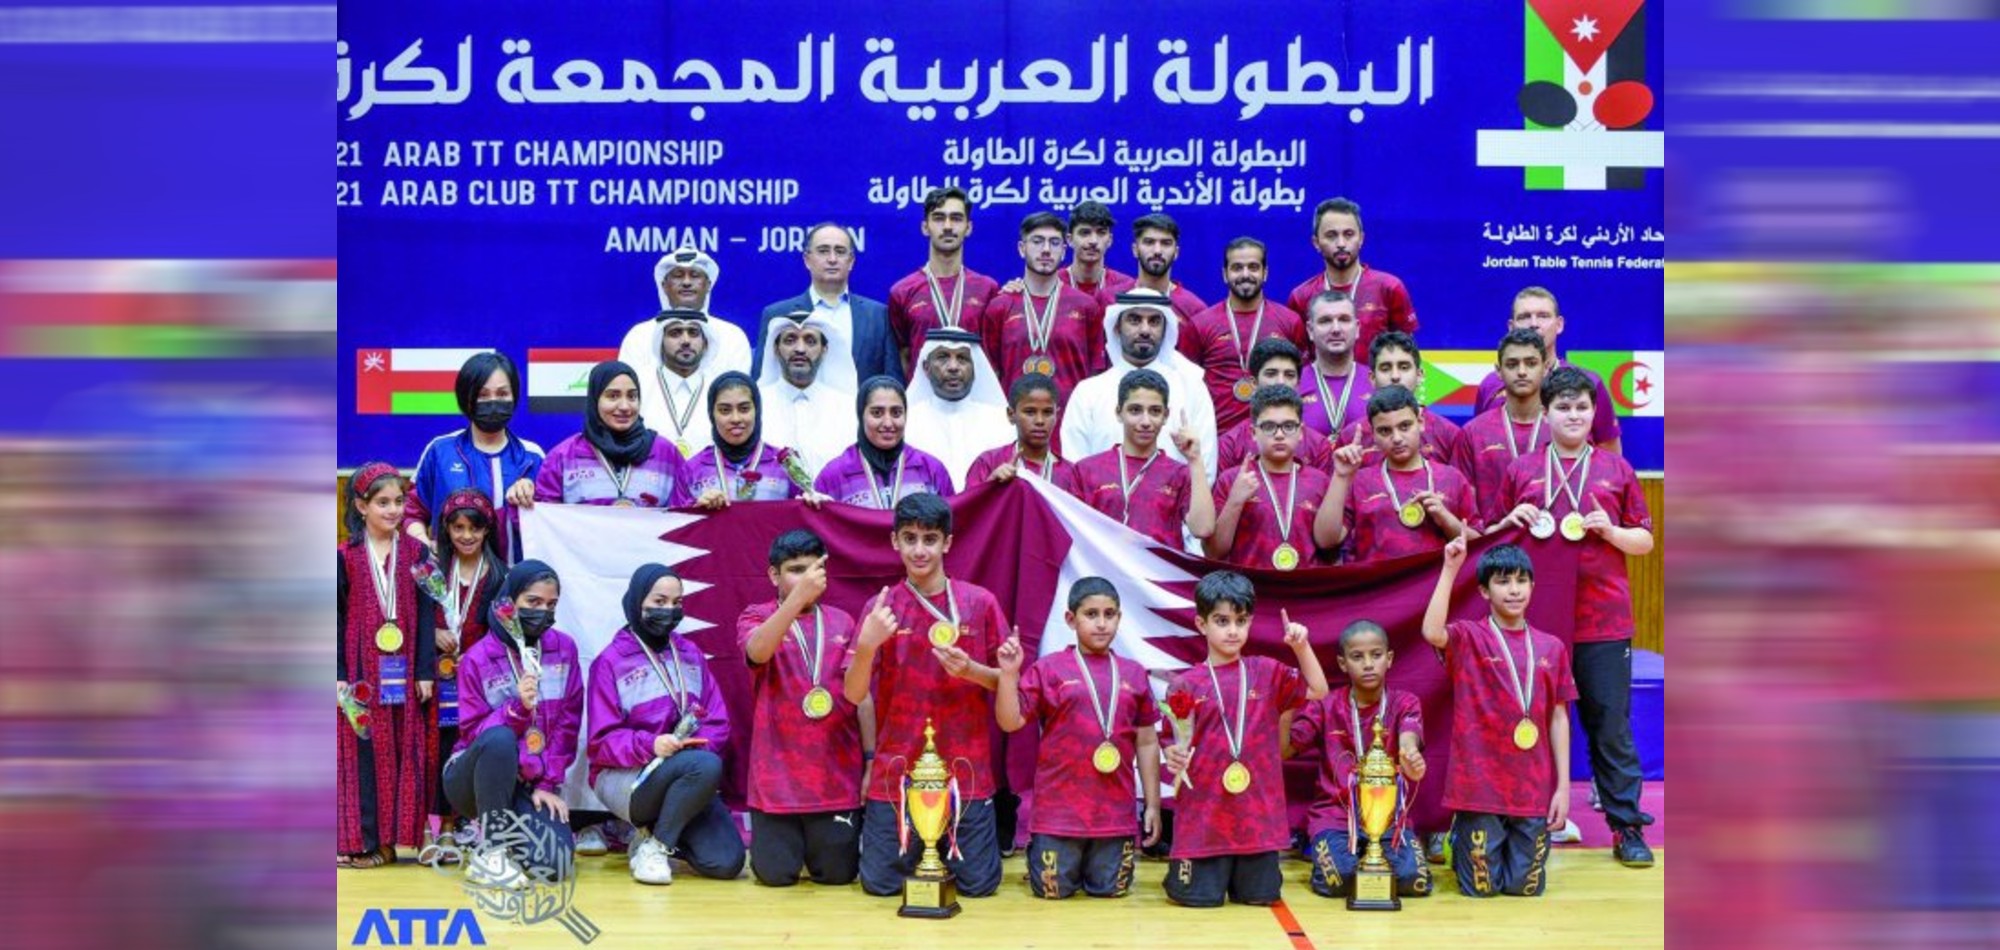 Qatar paddlers continue impressive run at Arab Championships